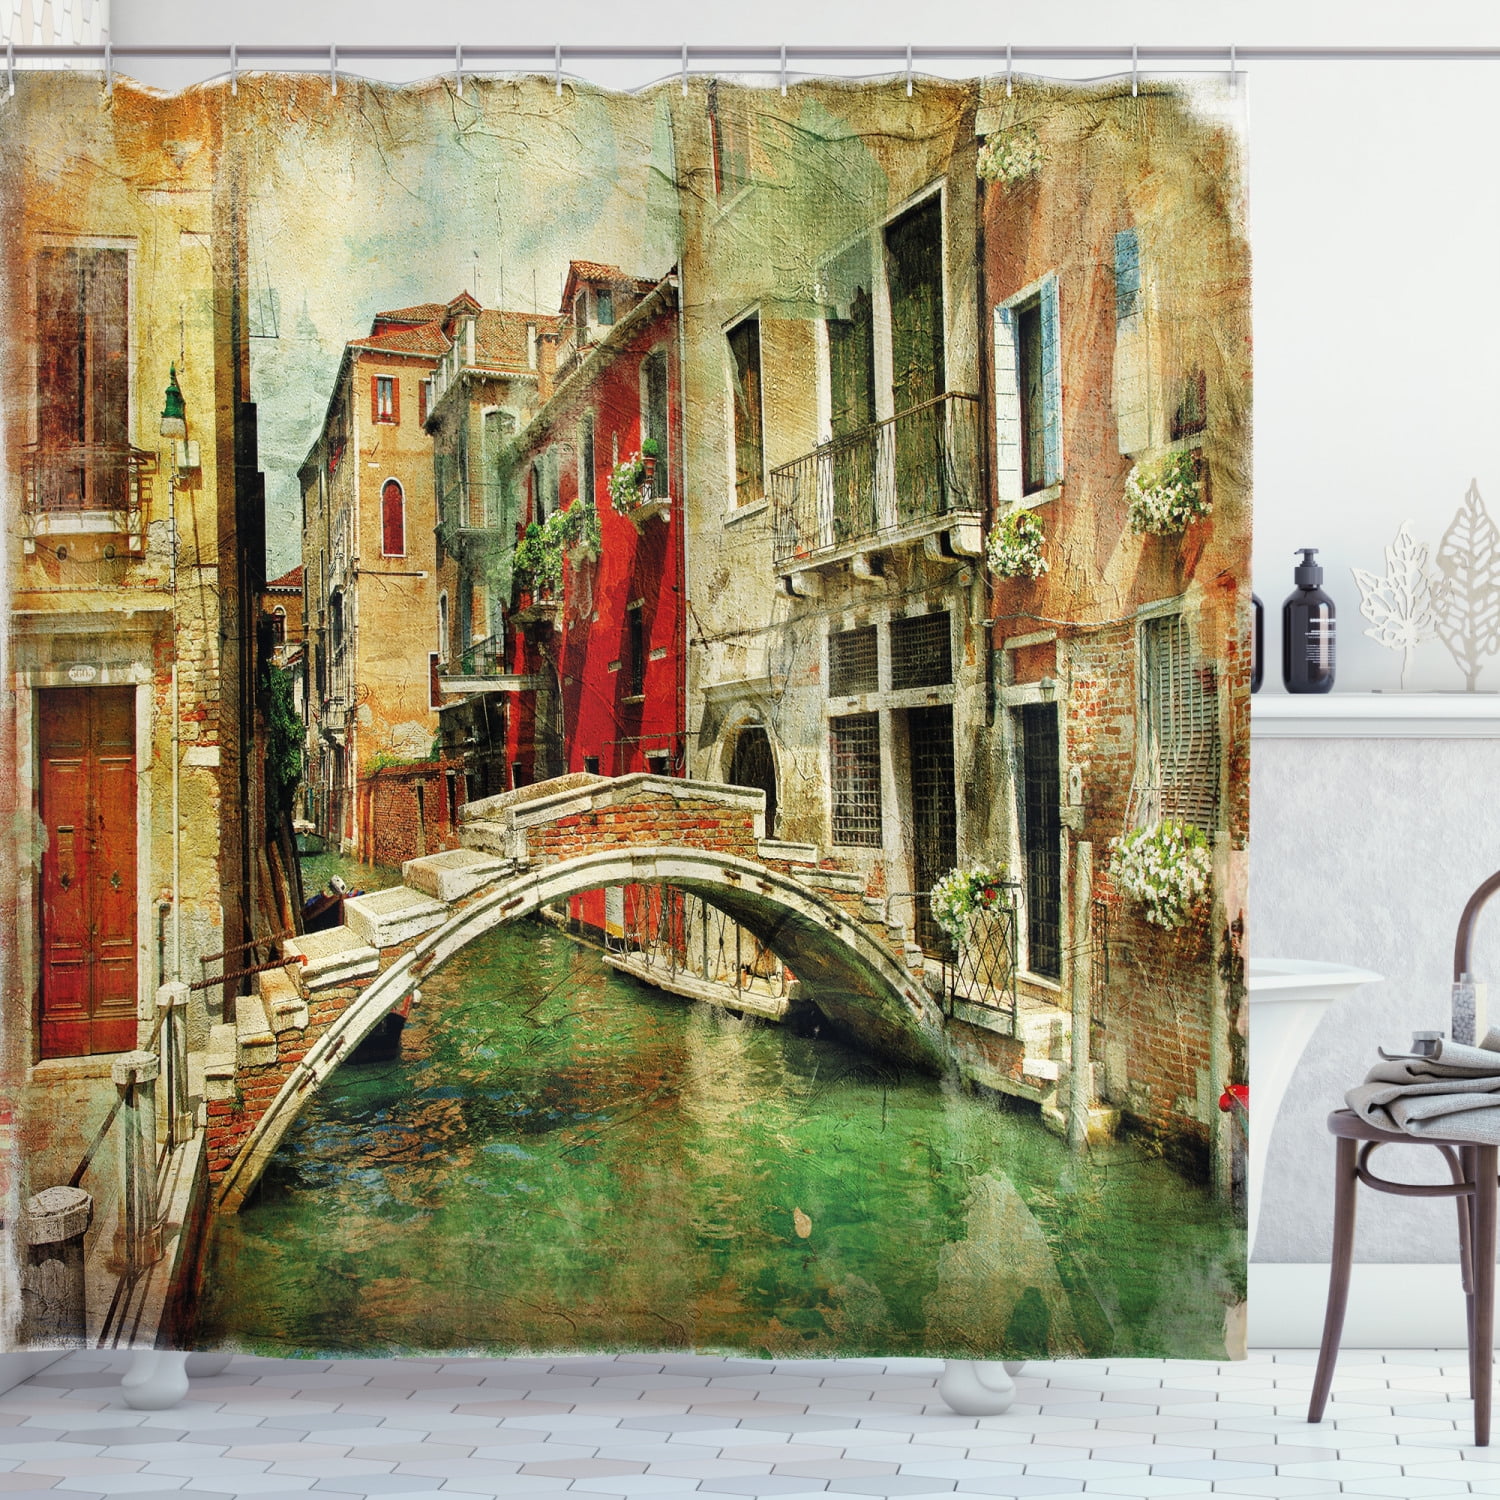 Shower Curtain City Venice Canal Landscape Italian Landmark 84 Inches Extra Long 